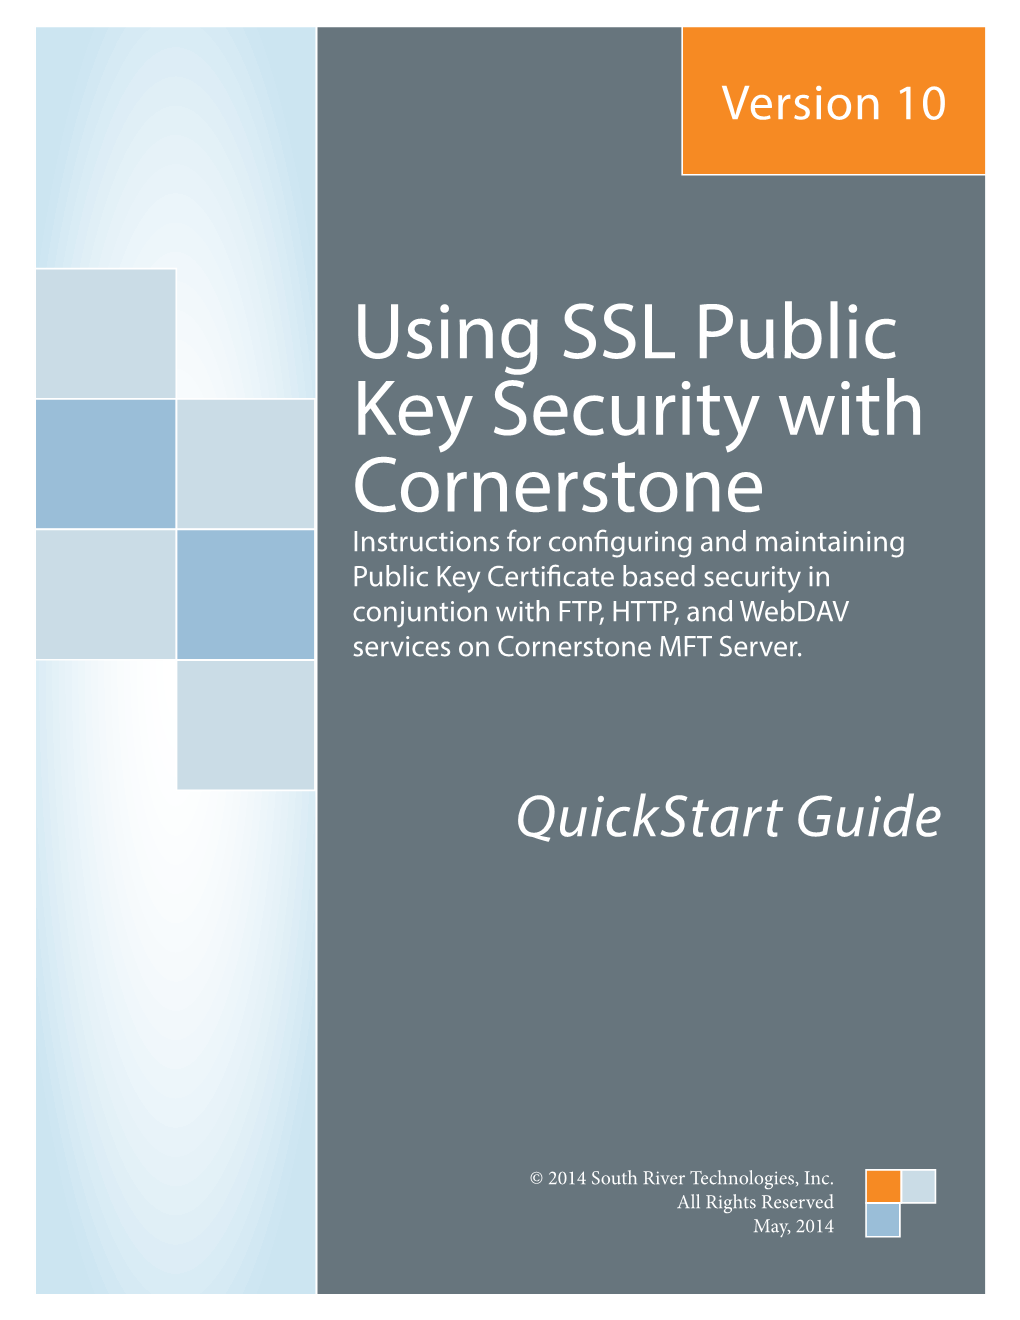 Using SSL Public Key Security with Cornerstone